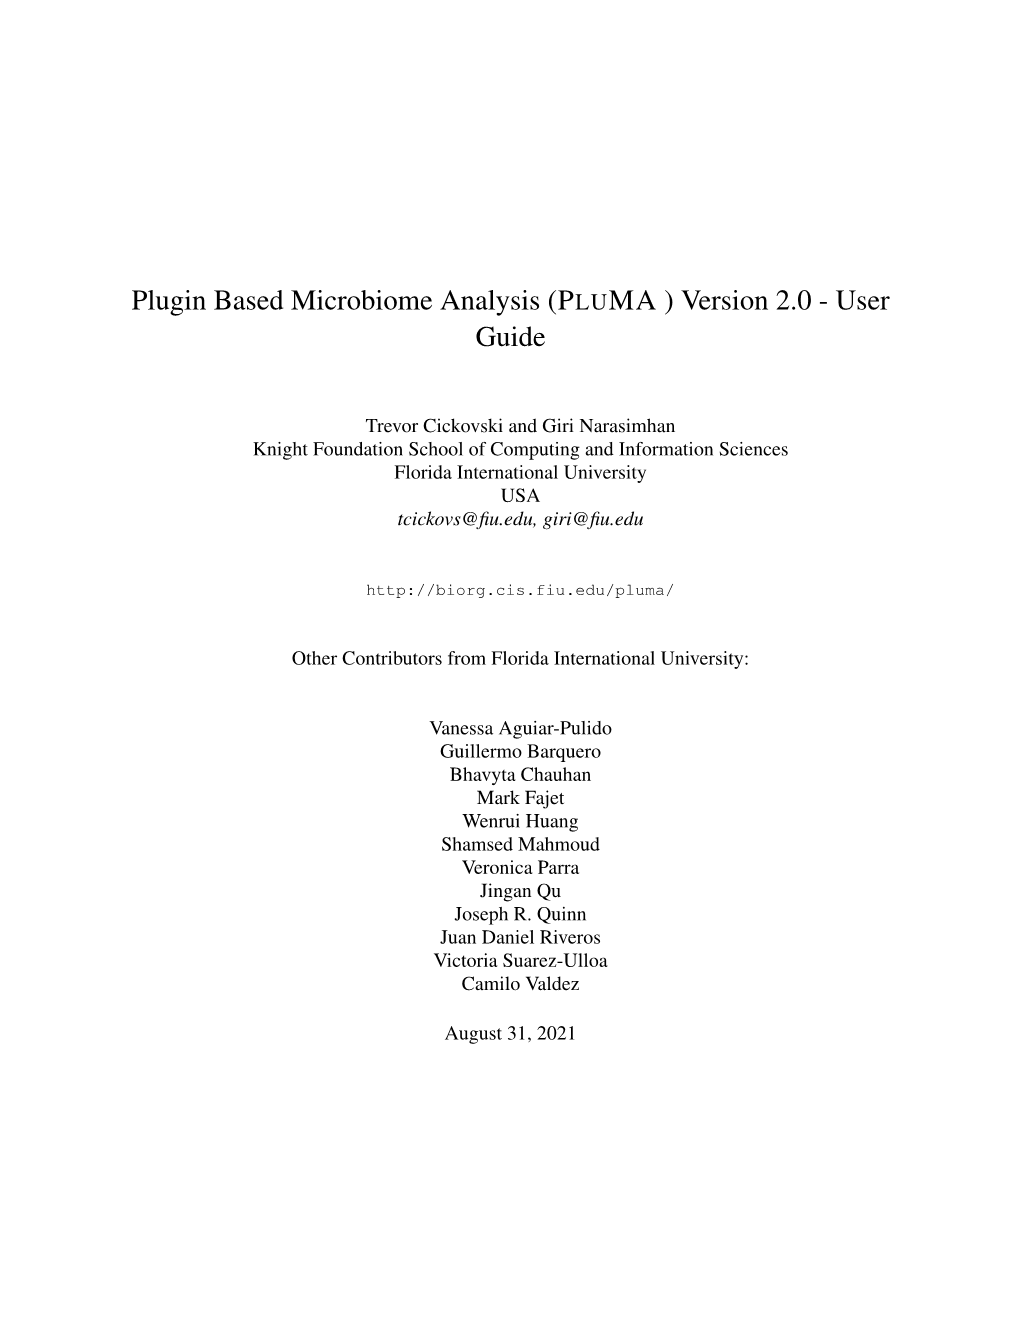 Plugin Based Microbiome Analysis (PLUMA ) Version 2.0 - User Guide